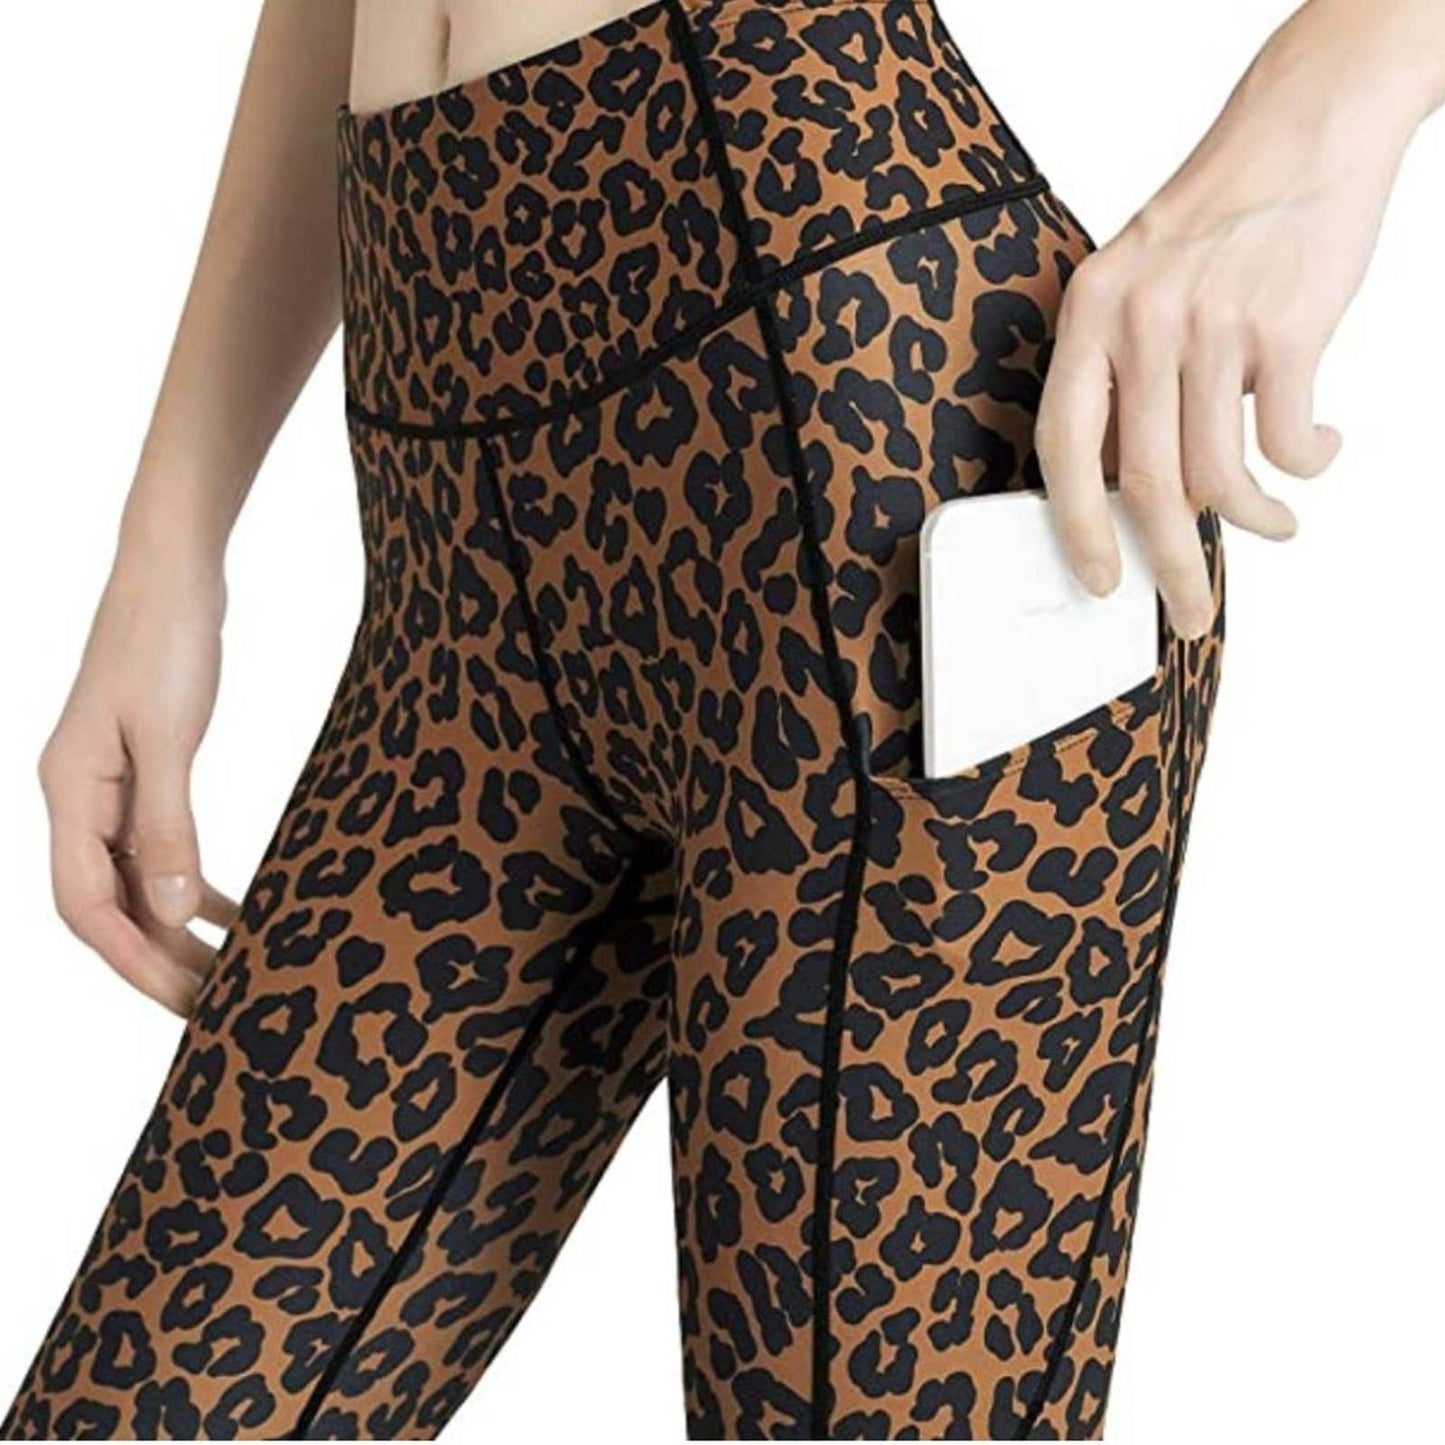 FITTIN Women's Cheetah Workout Capris with Pocket